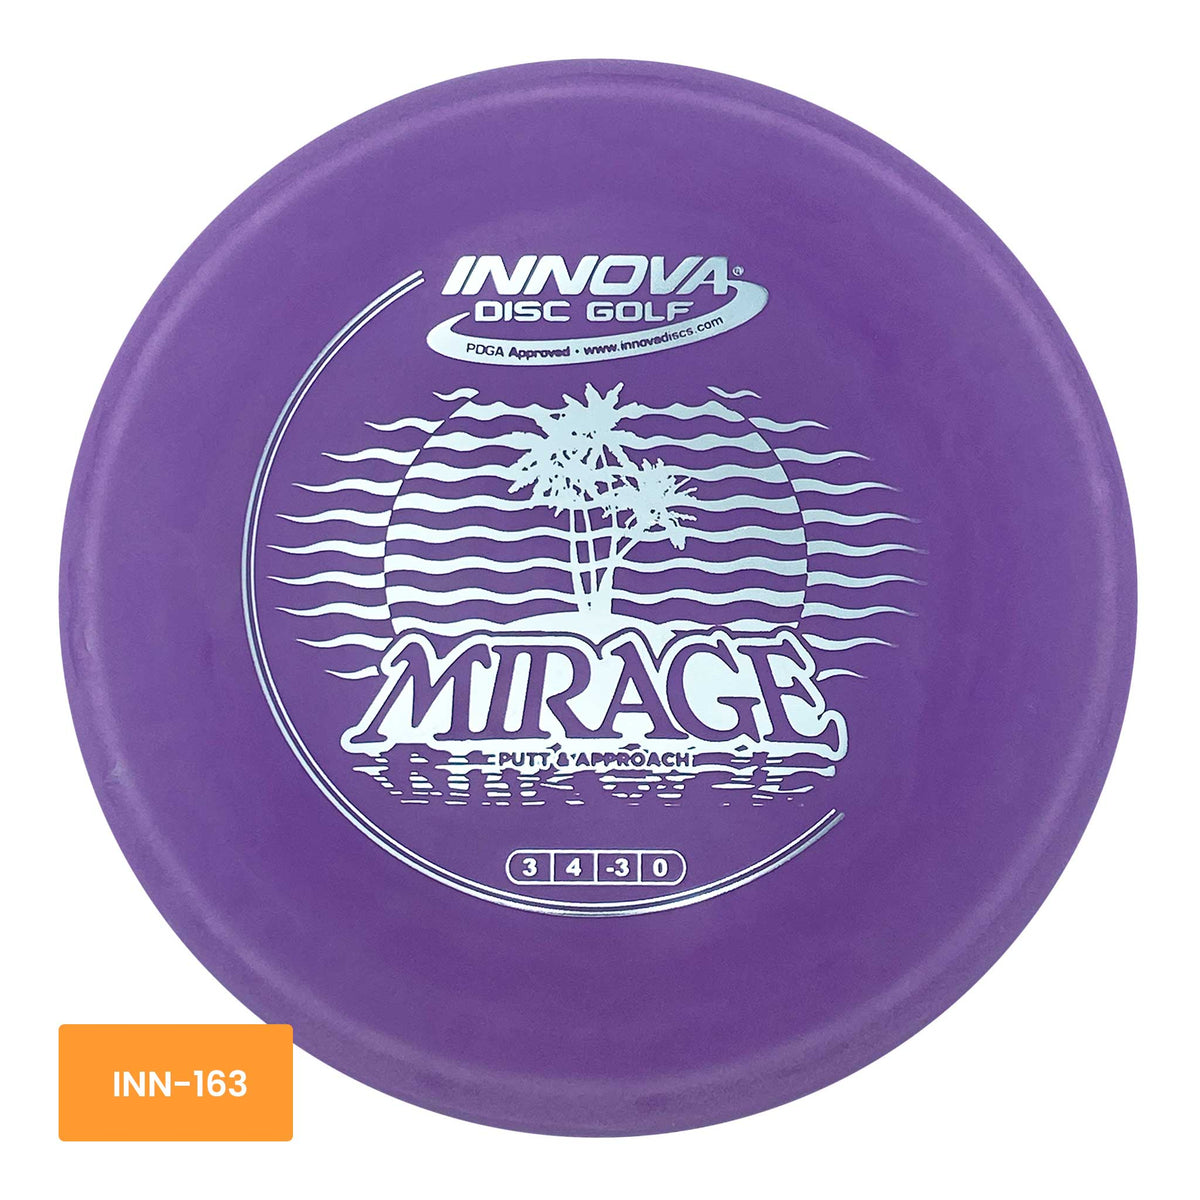 Innova Disc Golf Star DX Mirage putter and approach - Purple